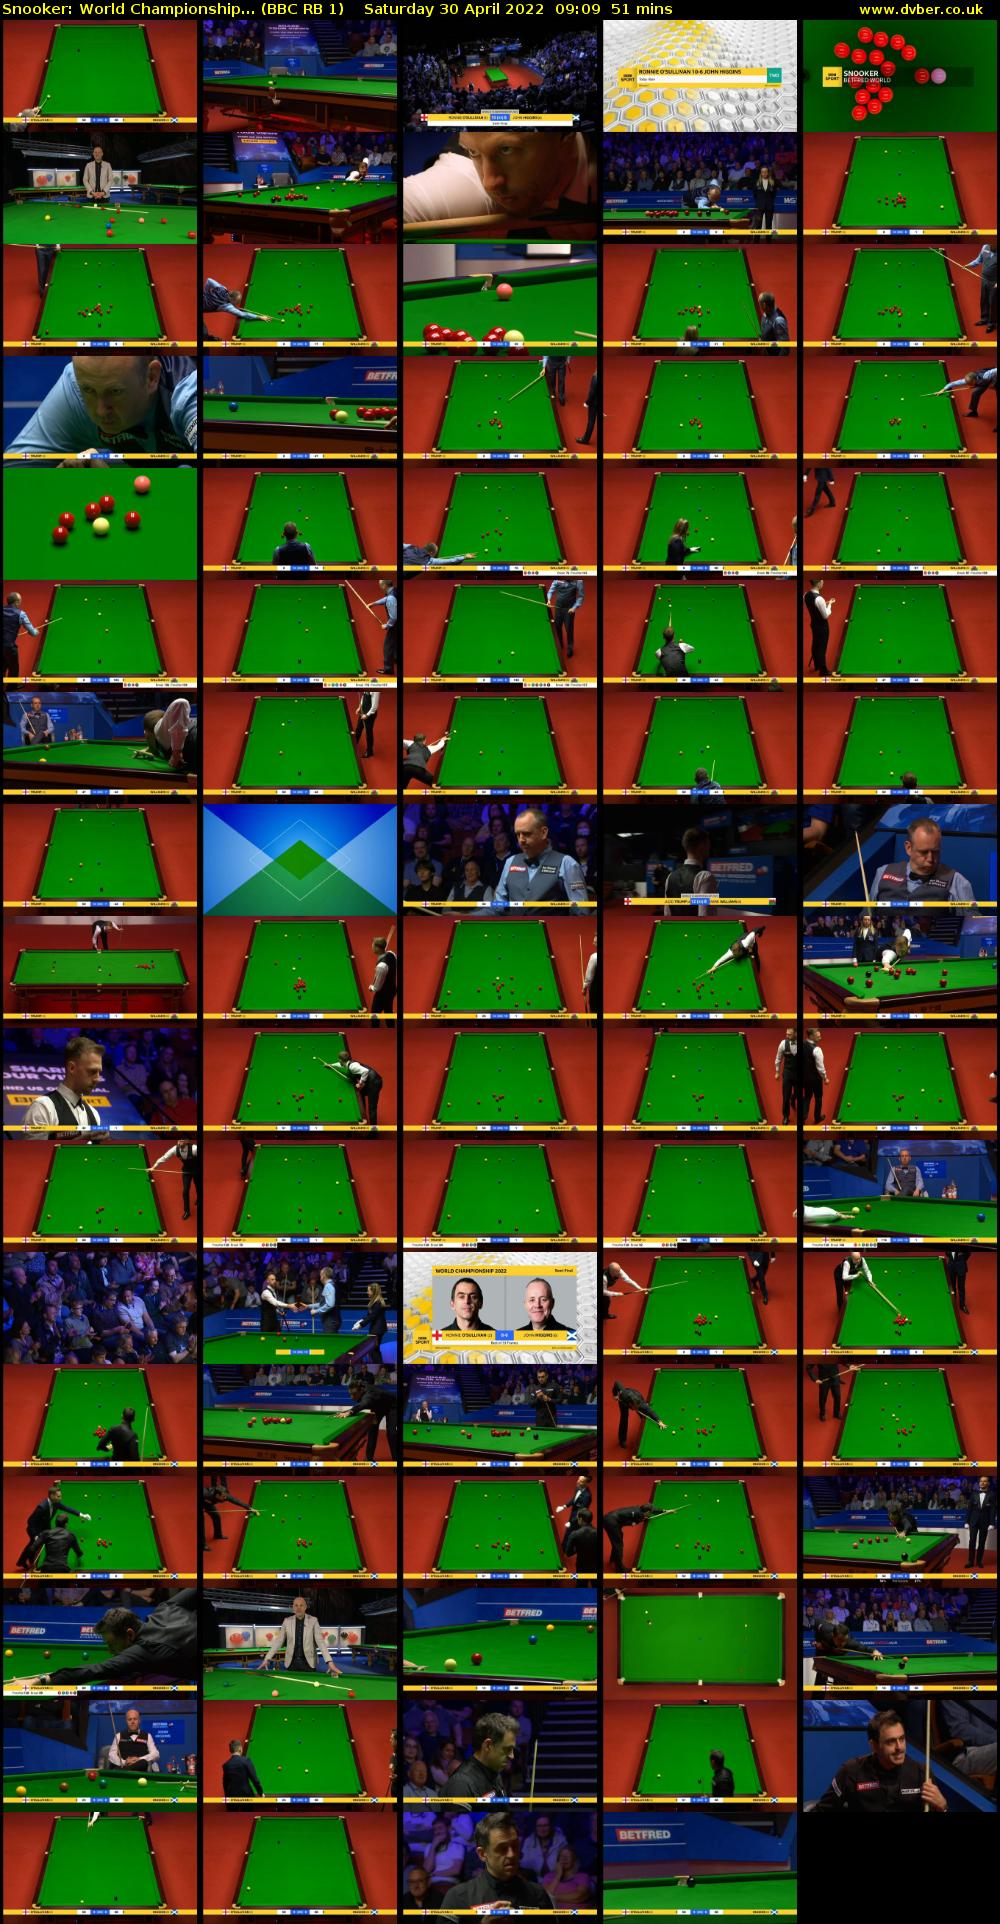 Snooker: World Championship... (BBC RB 1) Saturday 30 April 2022 09:09 - 10:00